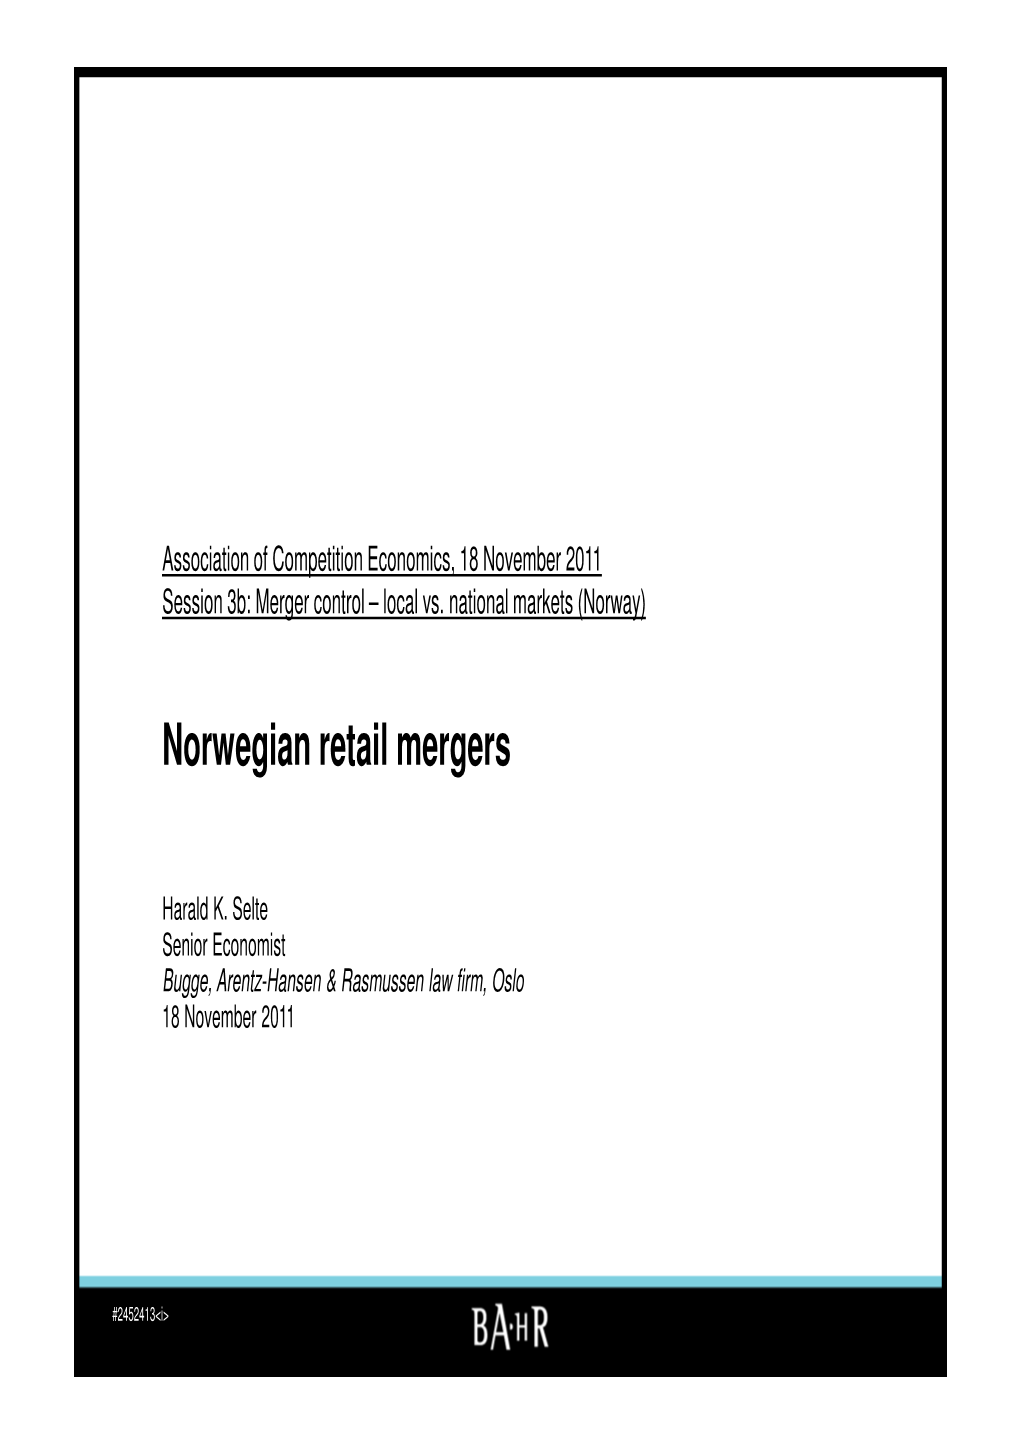 Norwegian Retail Mergers